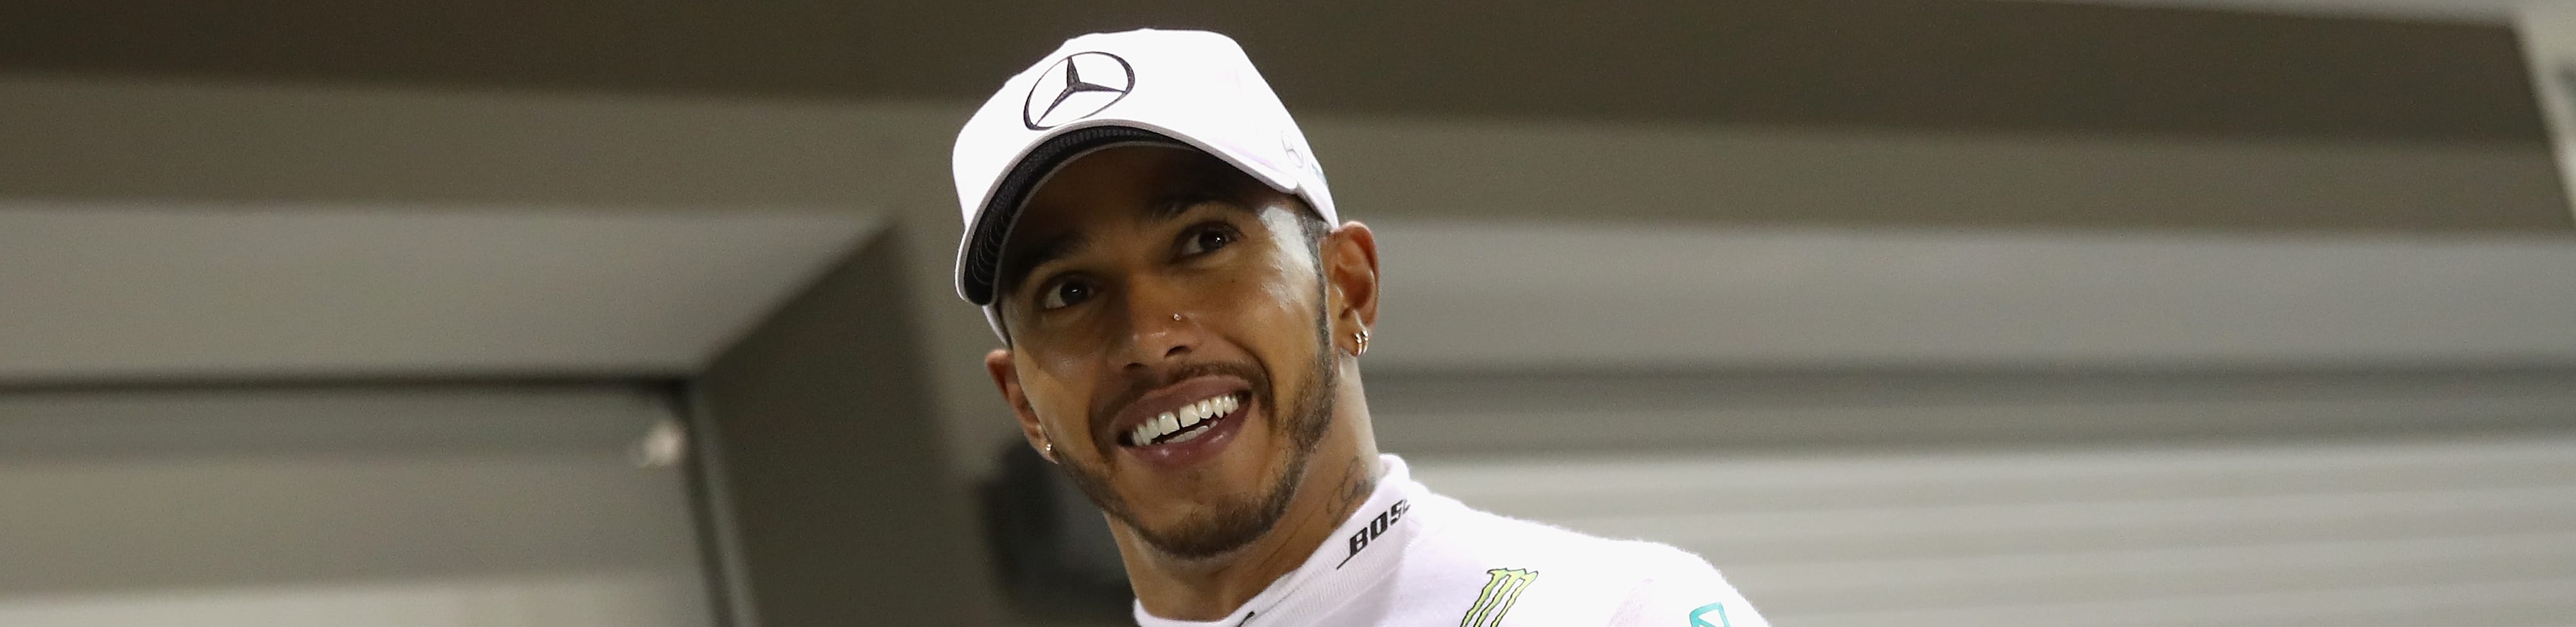 GP Singapore: Verstappen sogna, Hamilton non si accontenta. Tra i due litiganti gode Leclerc?